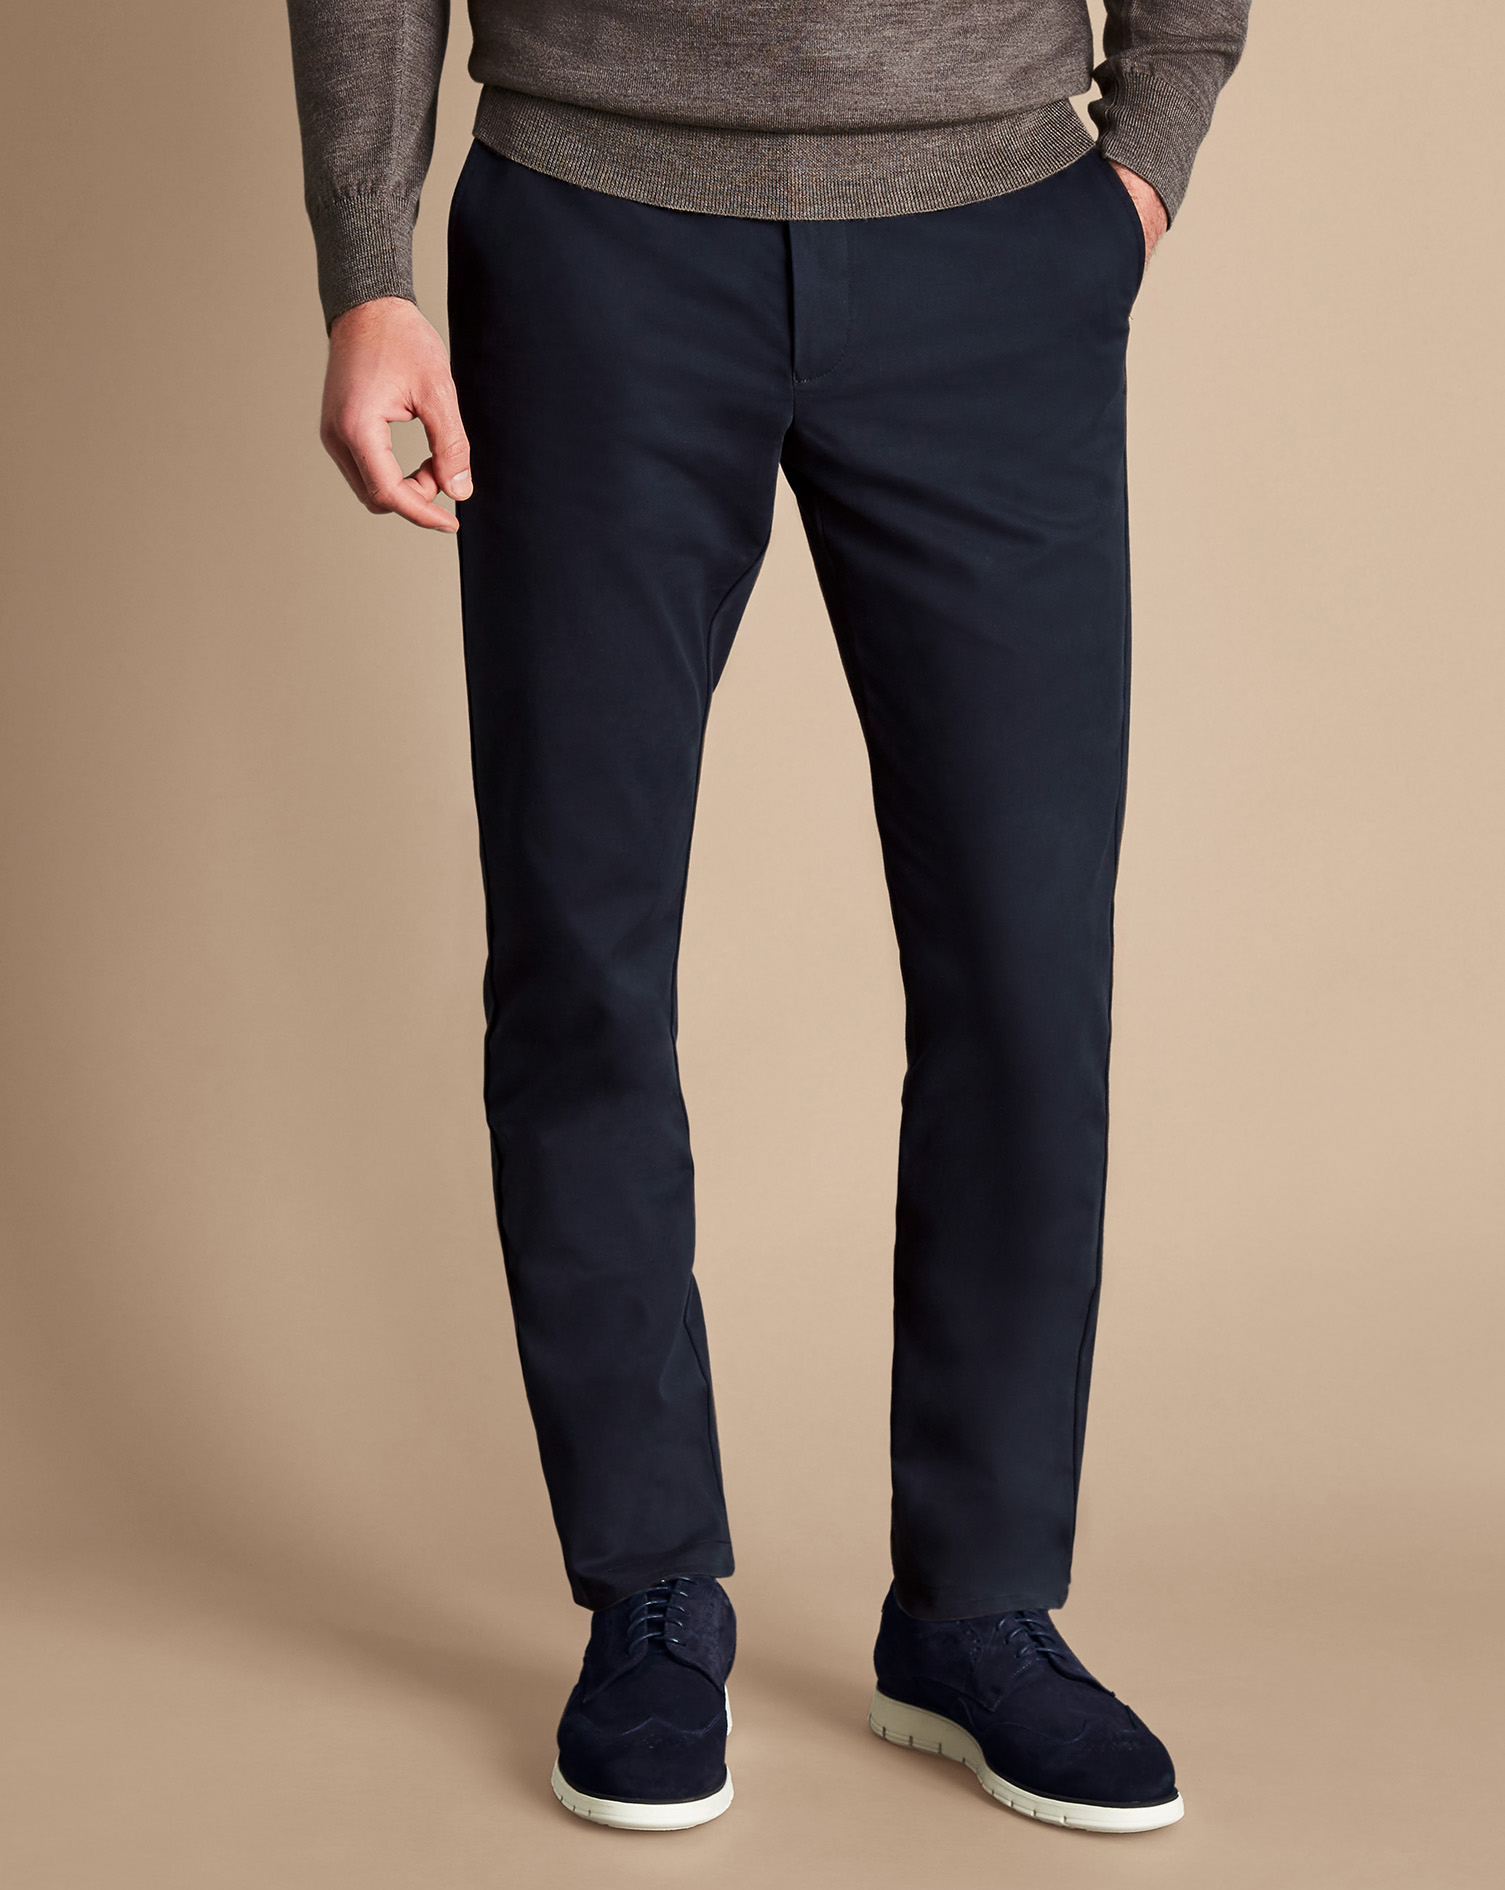 Men's Charles Tyrwhitt Ultimate Non-Iron Chino Pants - Navy Blue Size W44 L38 Cotton
